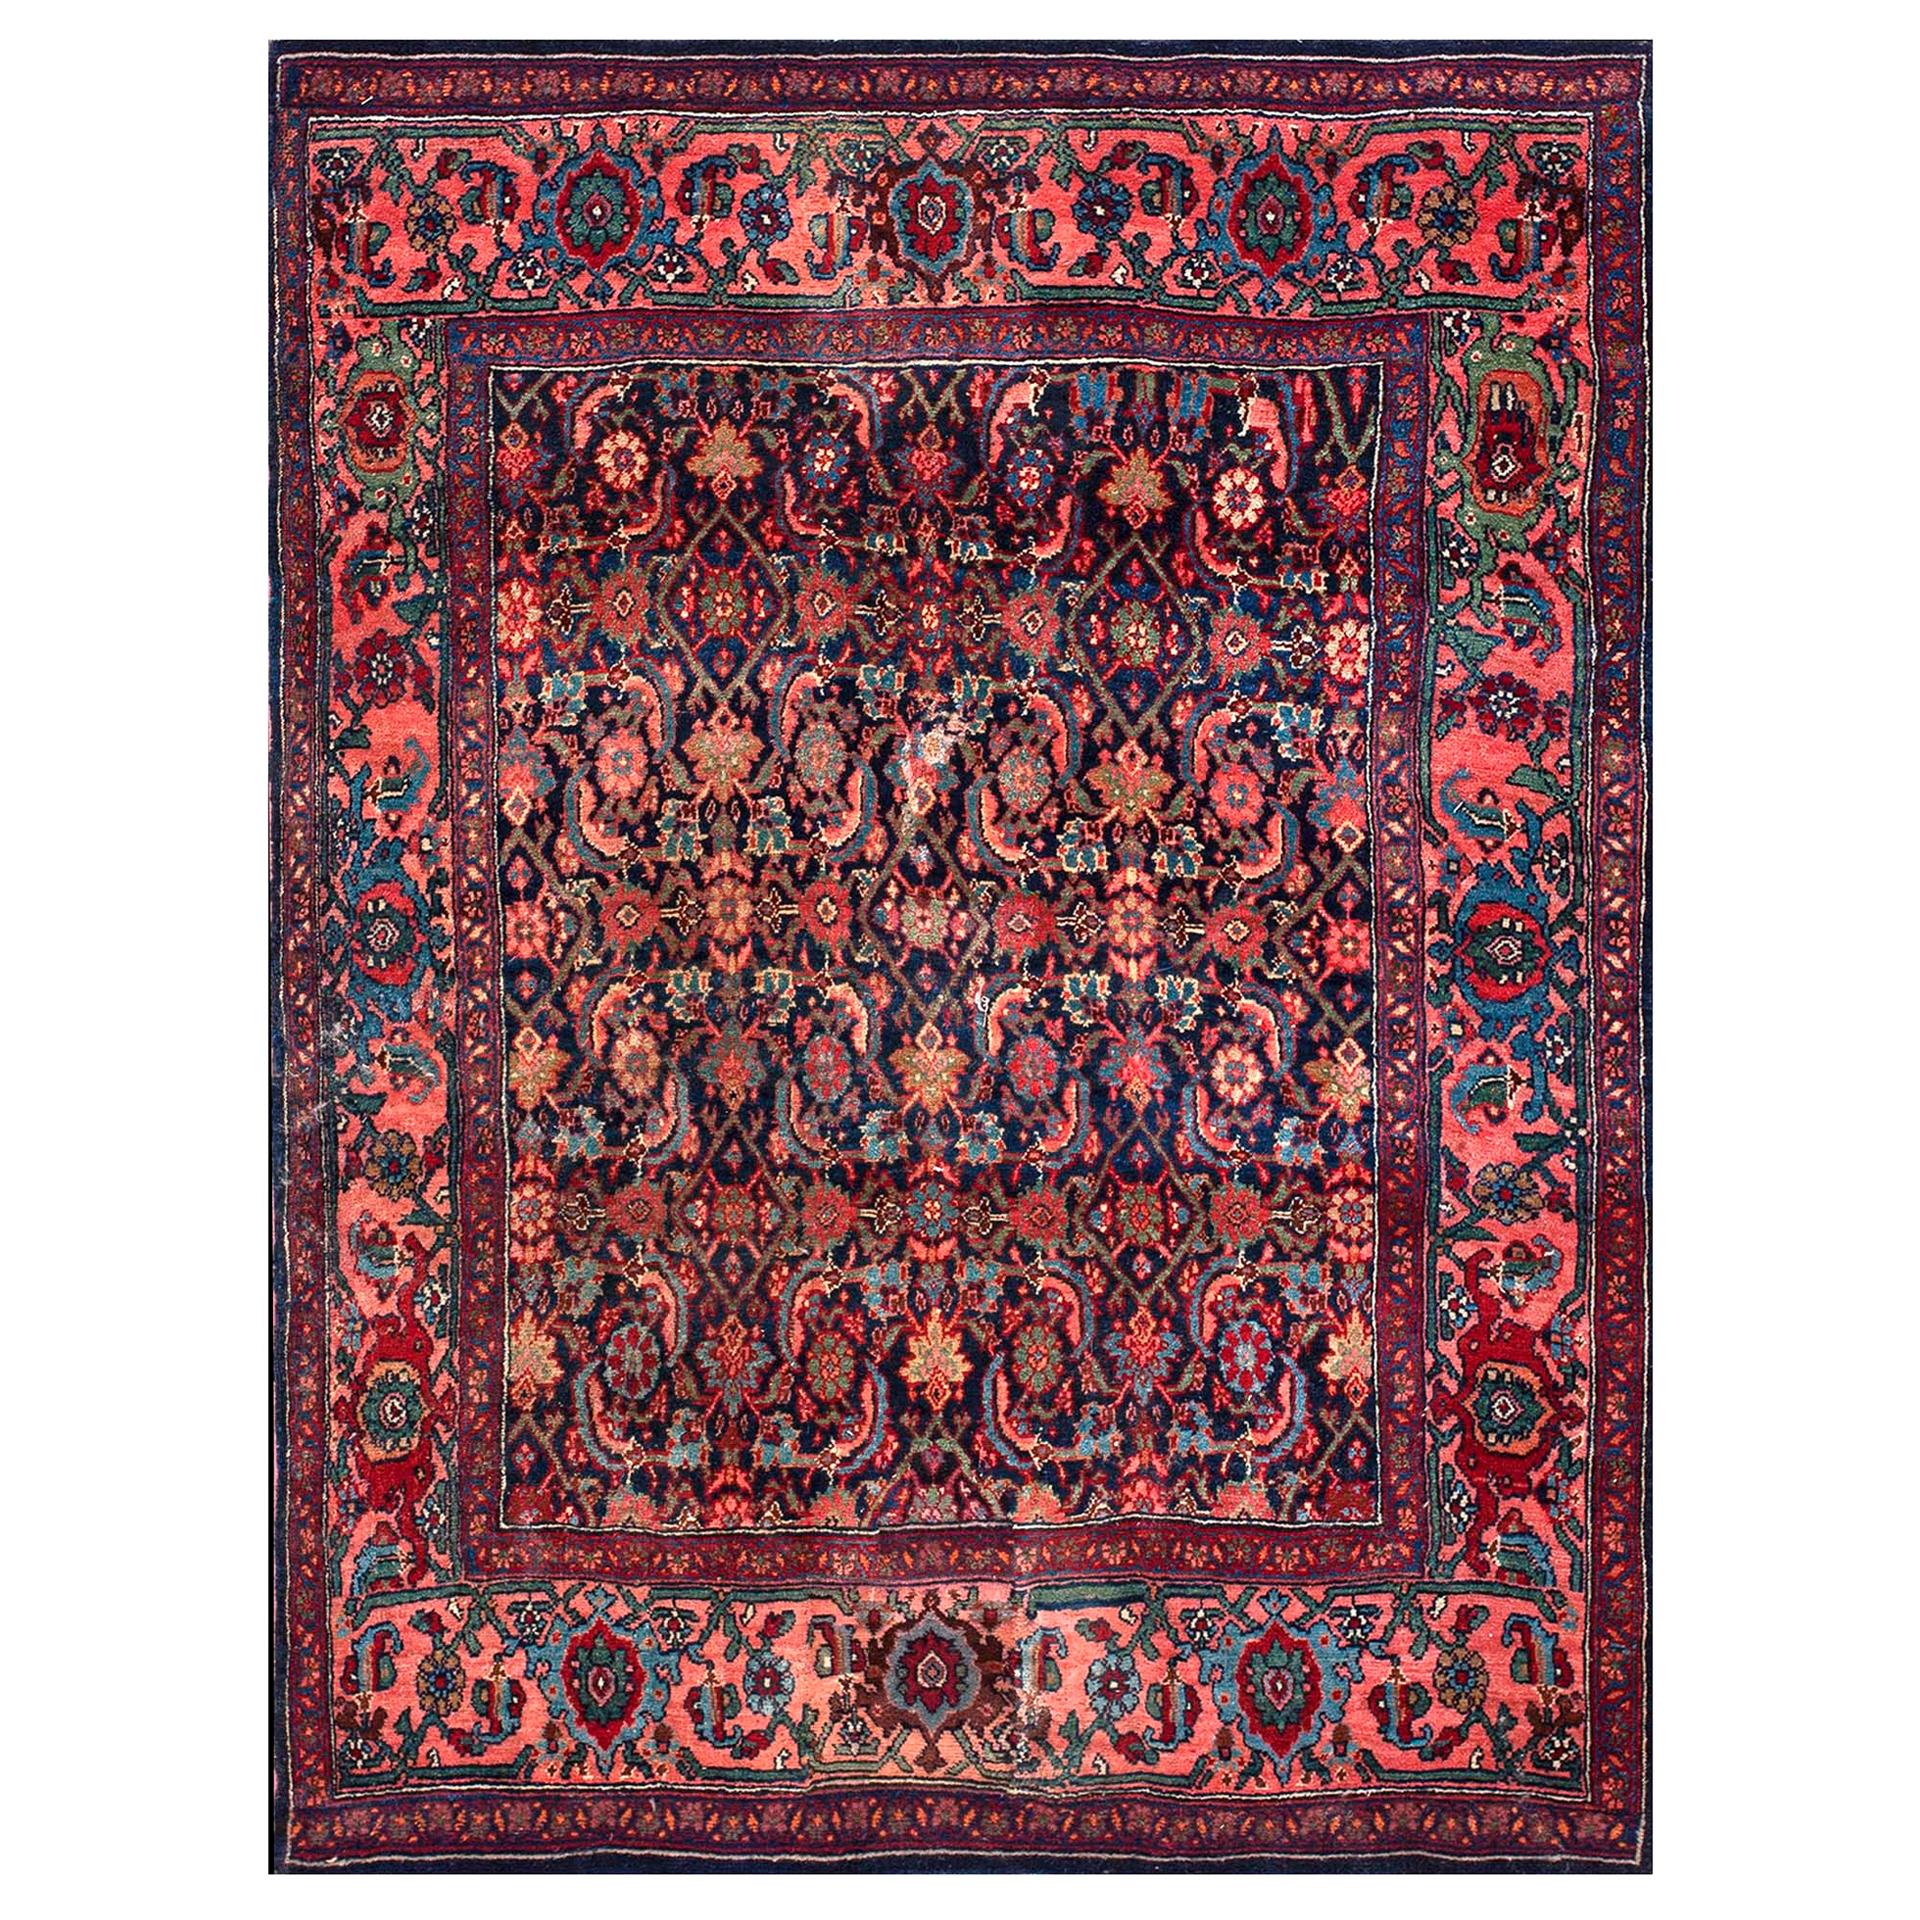 Early 20th Century W. Persian Bijar Rug ( 4' x 5'3" - 122 x 160 )